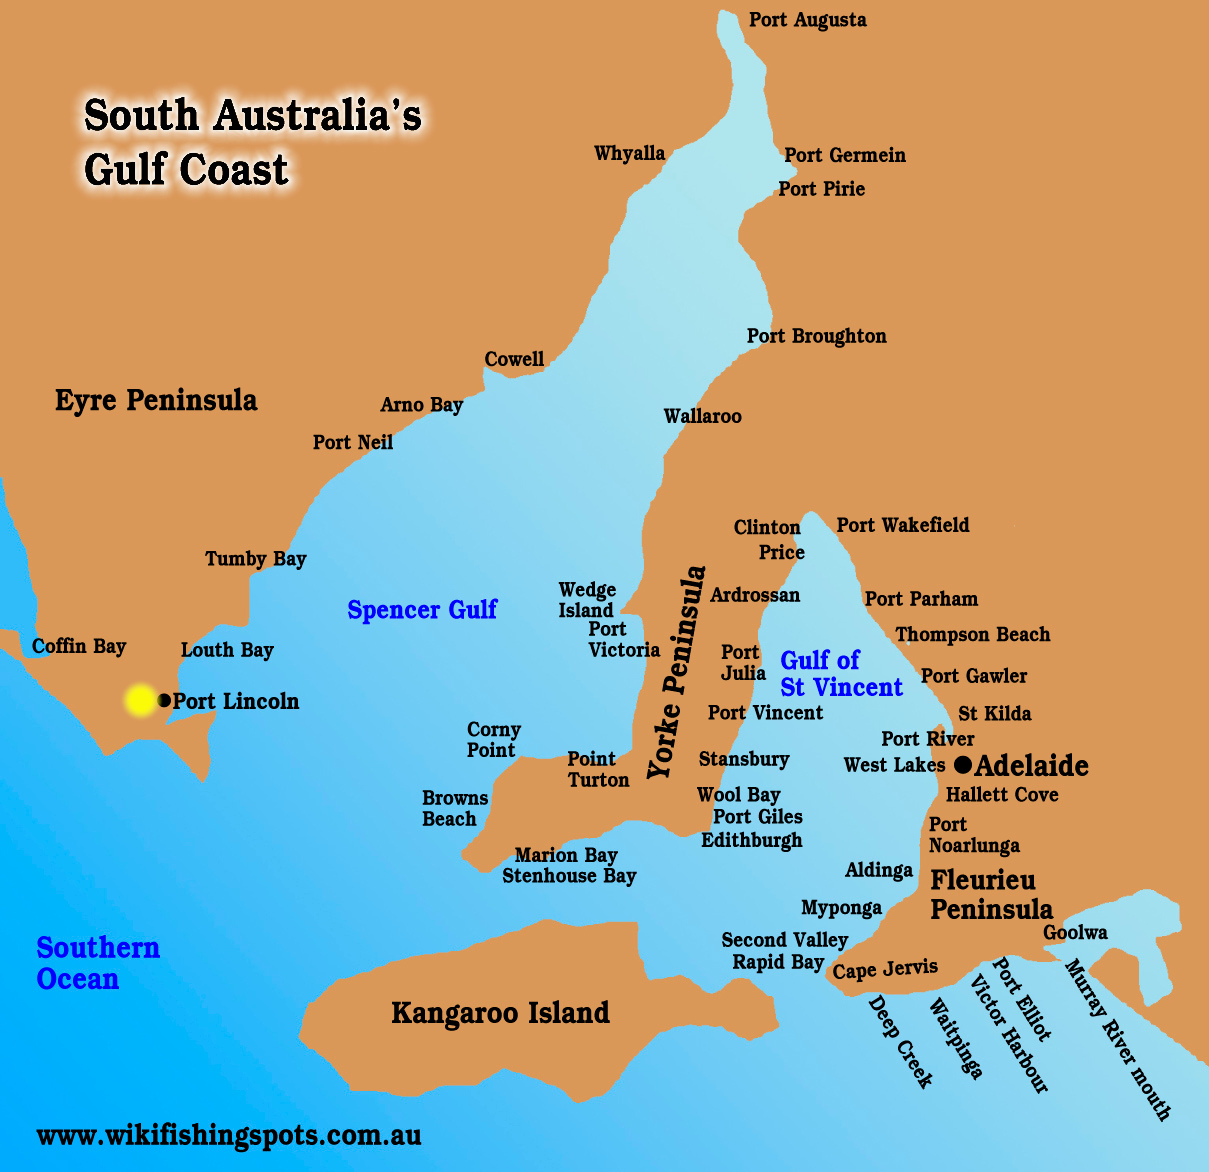 Port Lincoln, South Australia